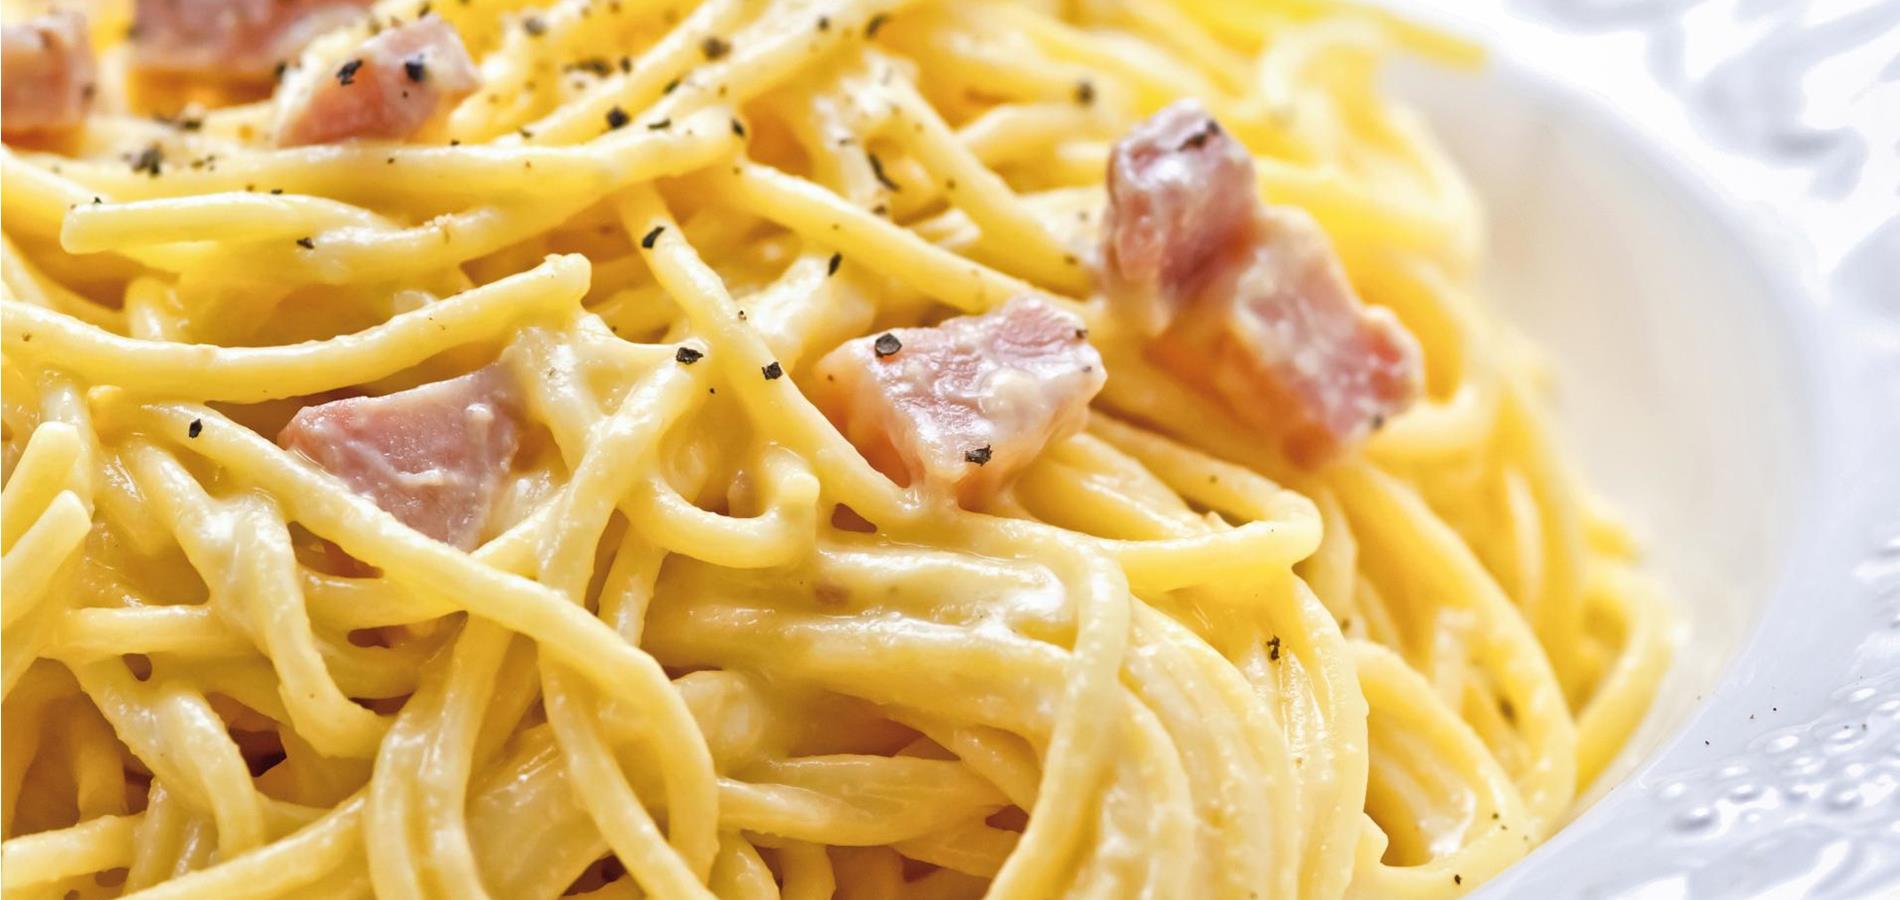 Spaghetti alla carbonara (ohne Sahne)